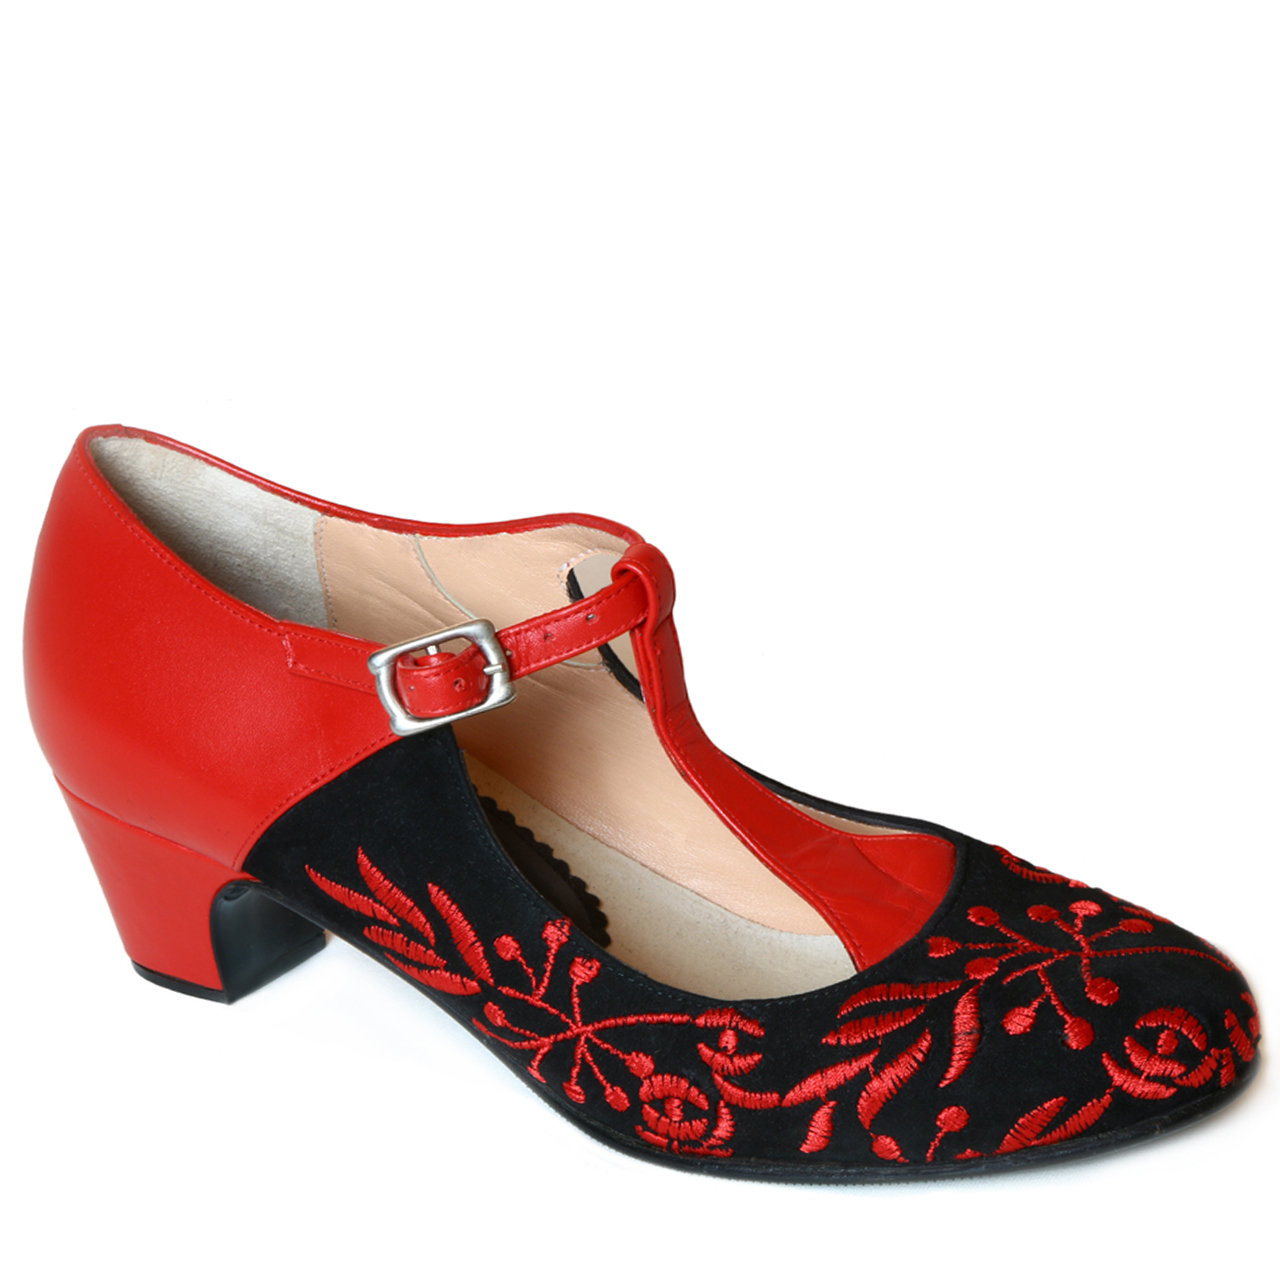 Flamenco dance shoe dos correas suede 